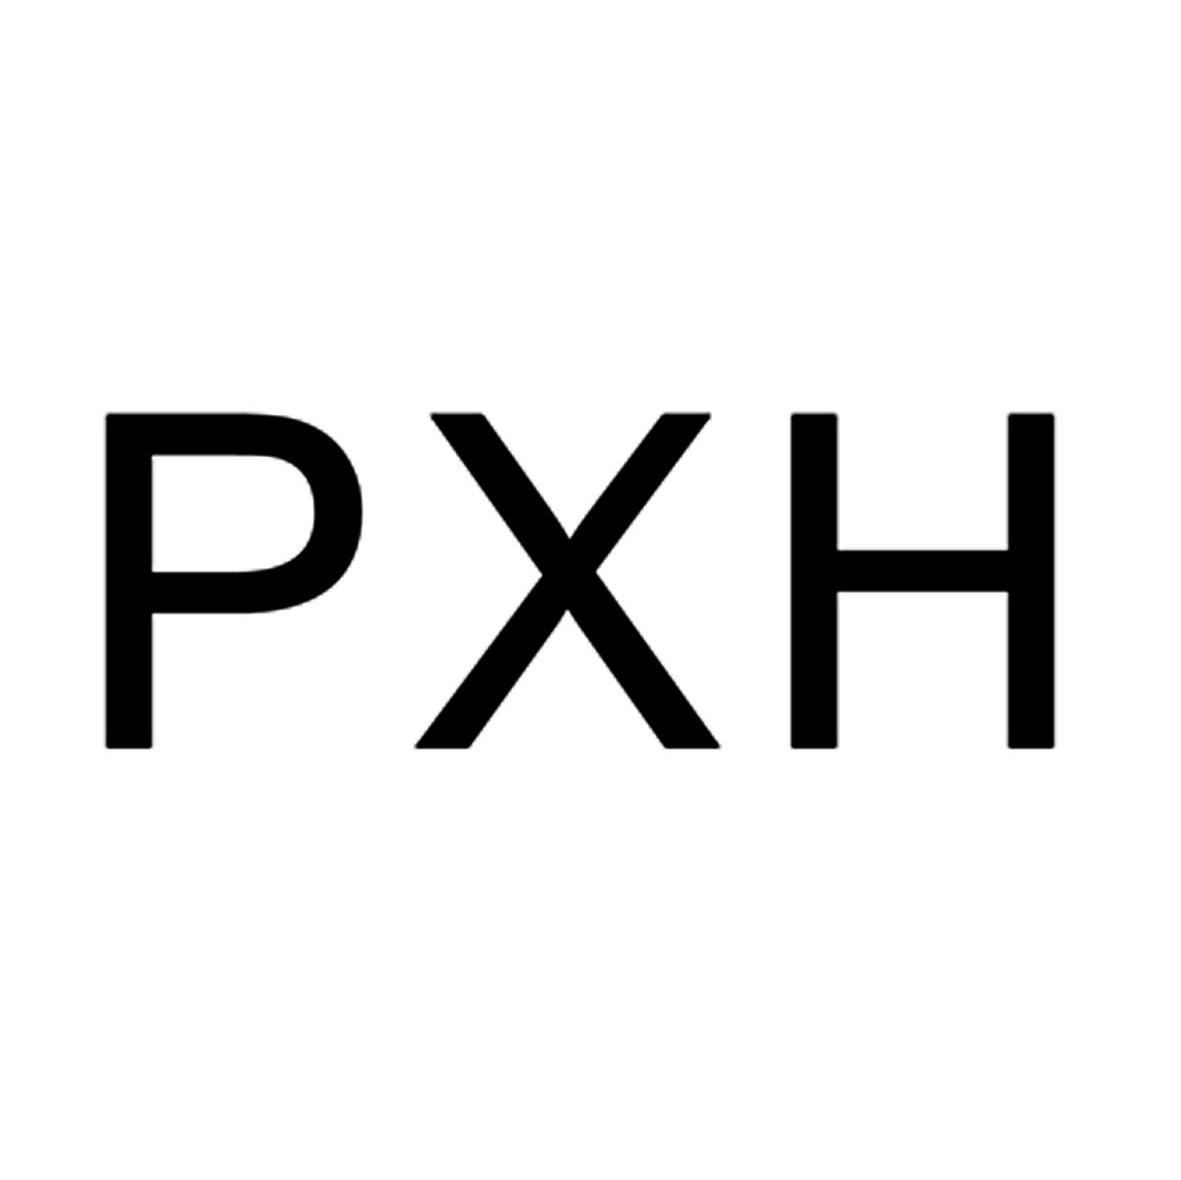 PXH